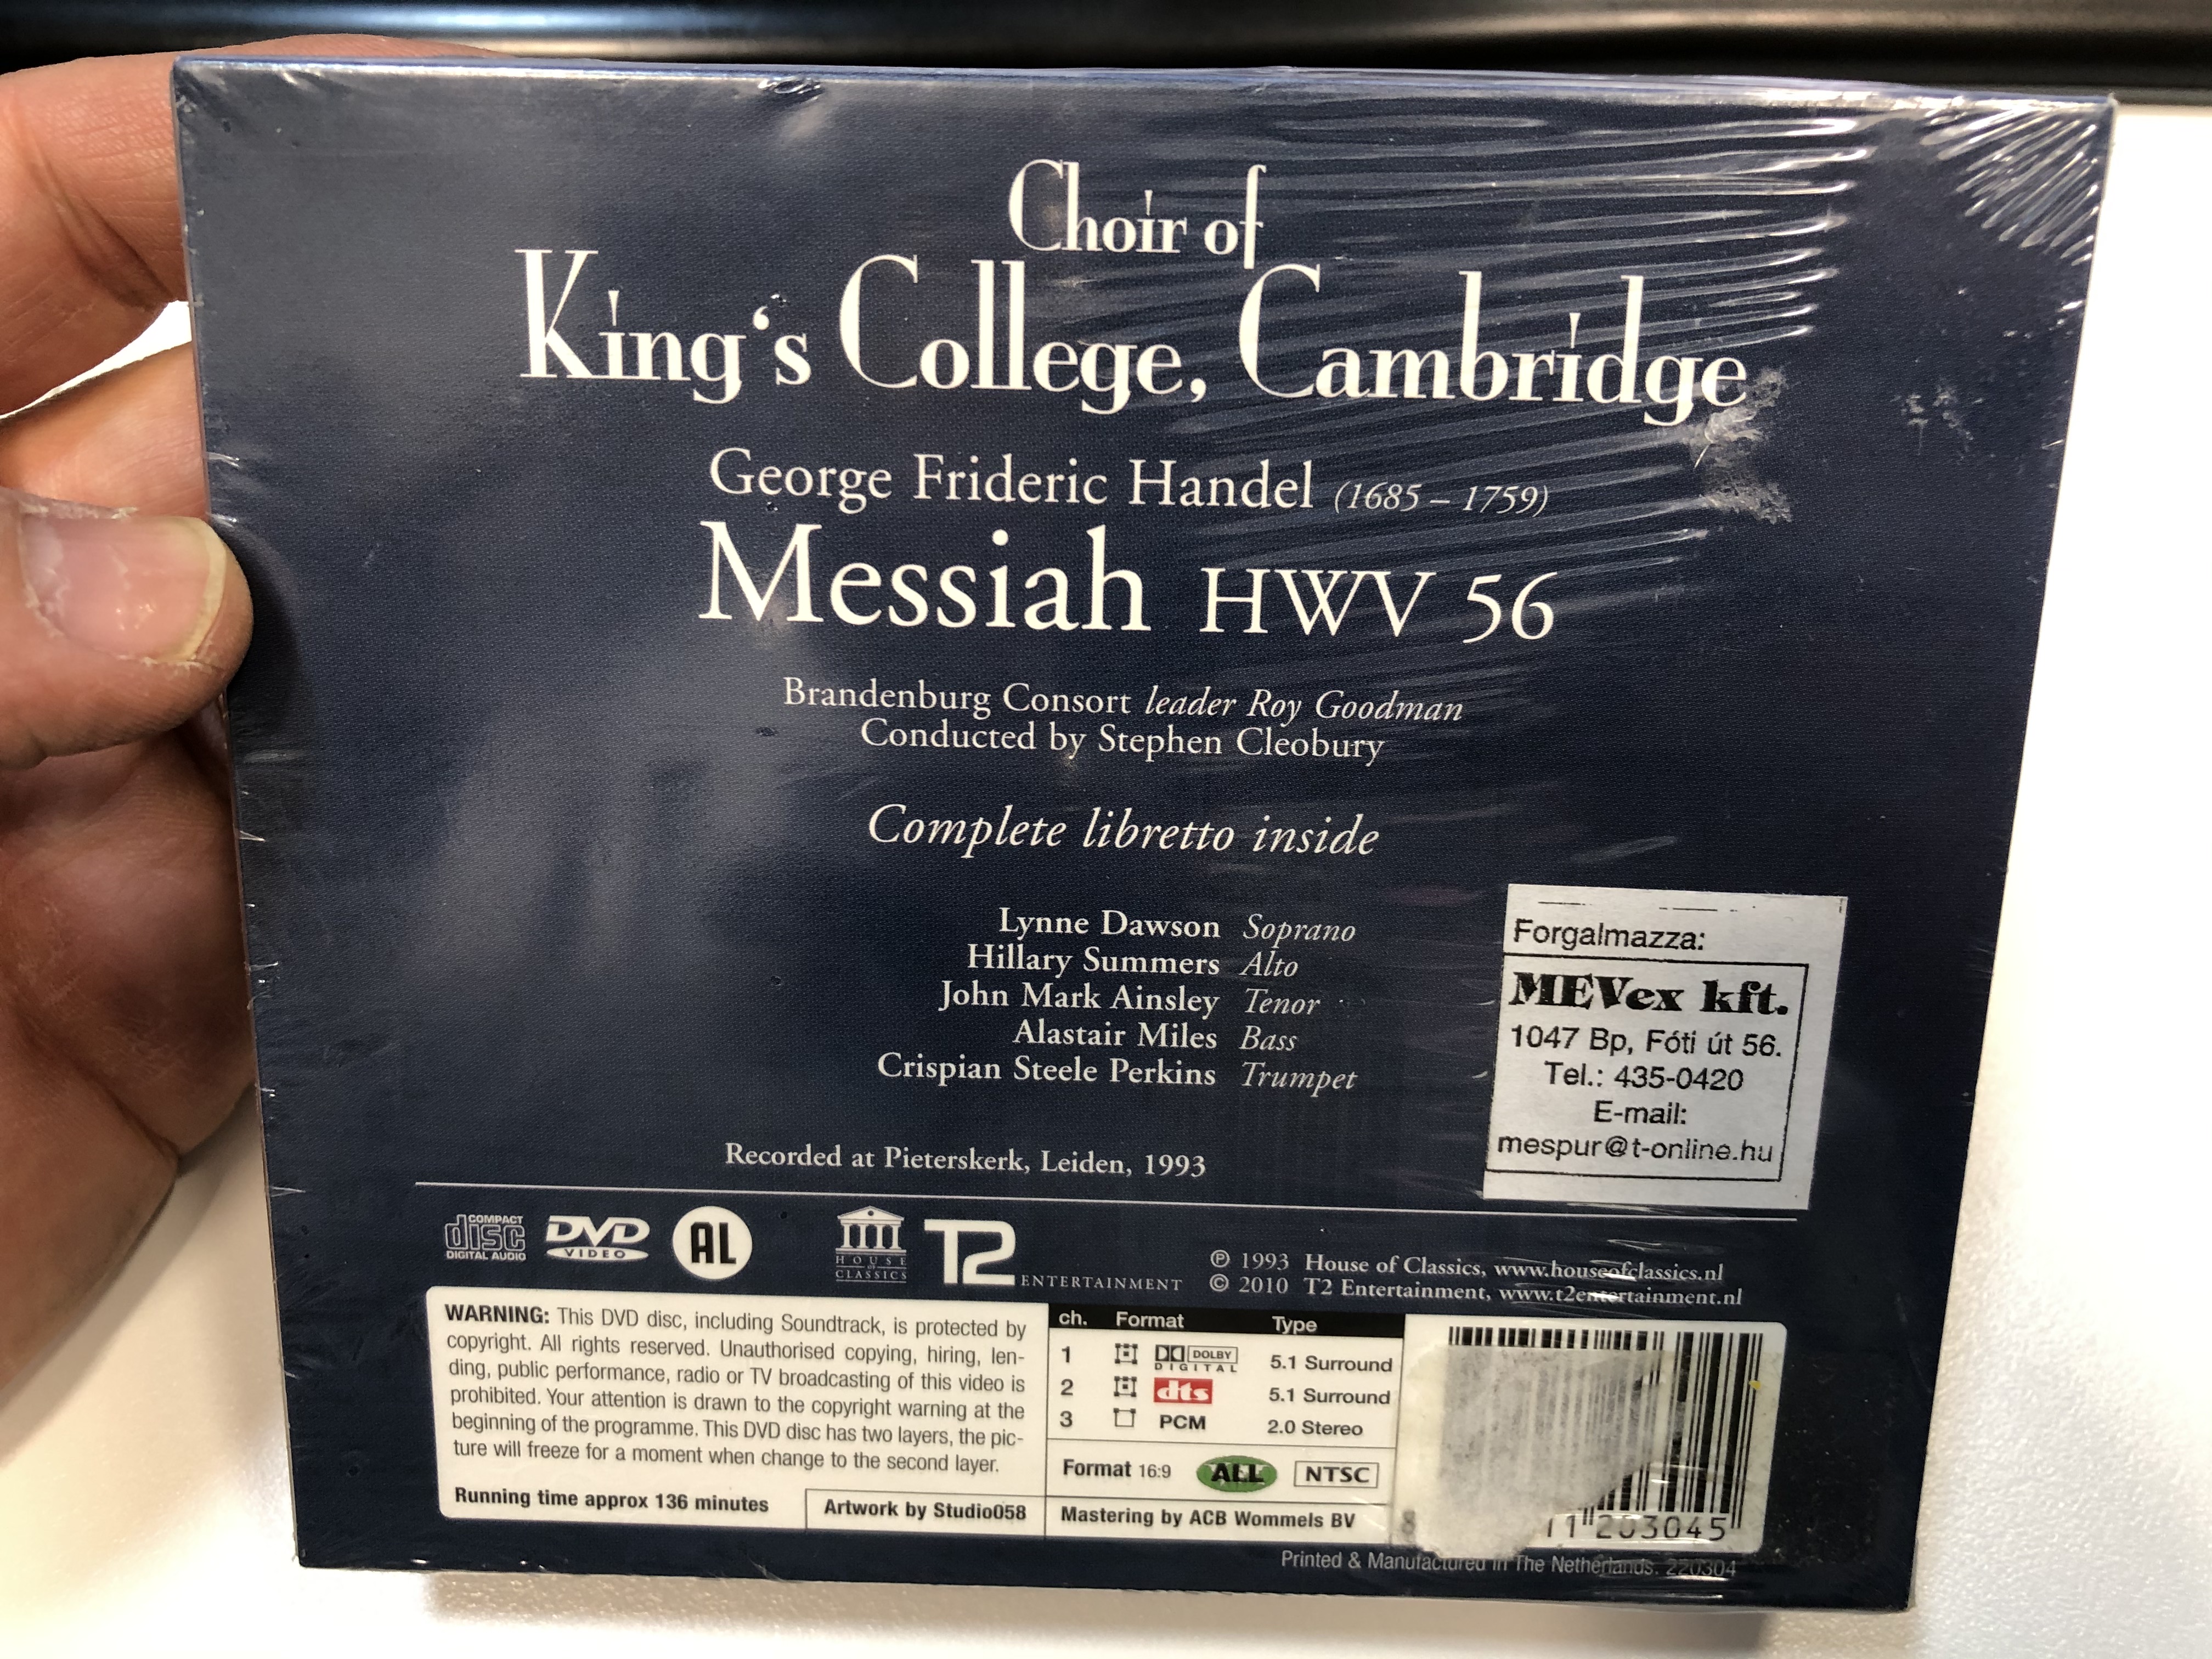 choir-of-king-s-college-cambridge-george-frideric-handel-messiah-brabdenburg-consort-leader-roy-goodman-conducted-by-stephen-celobury-house-of-classics-3x-audio-cd-2010-220304-3-.jpg